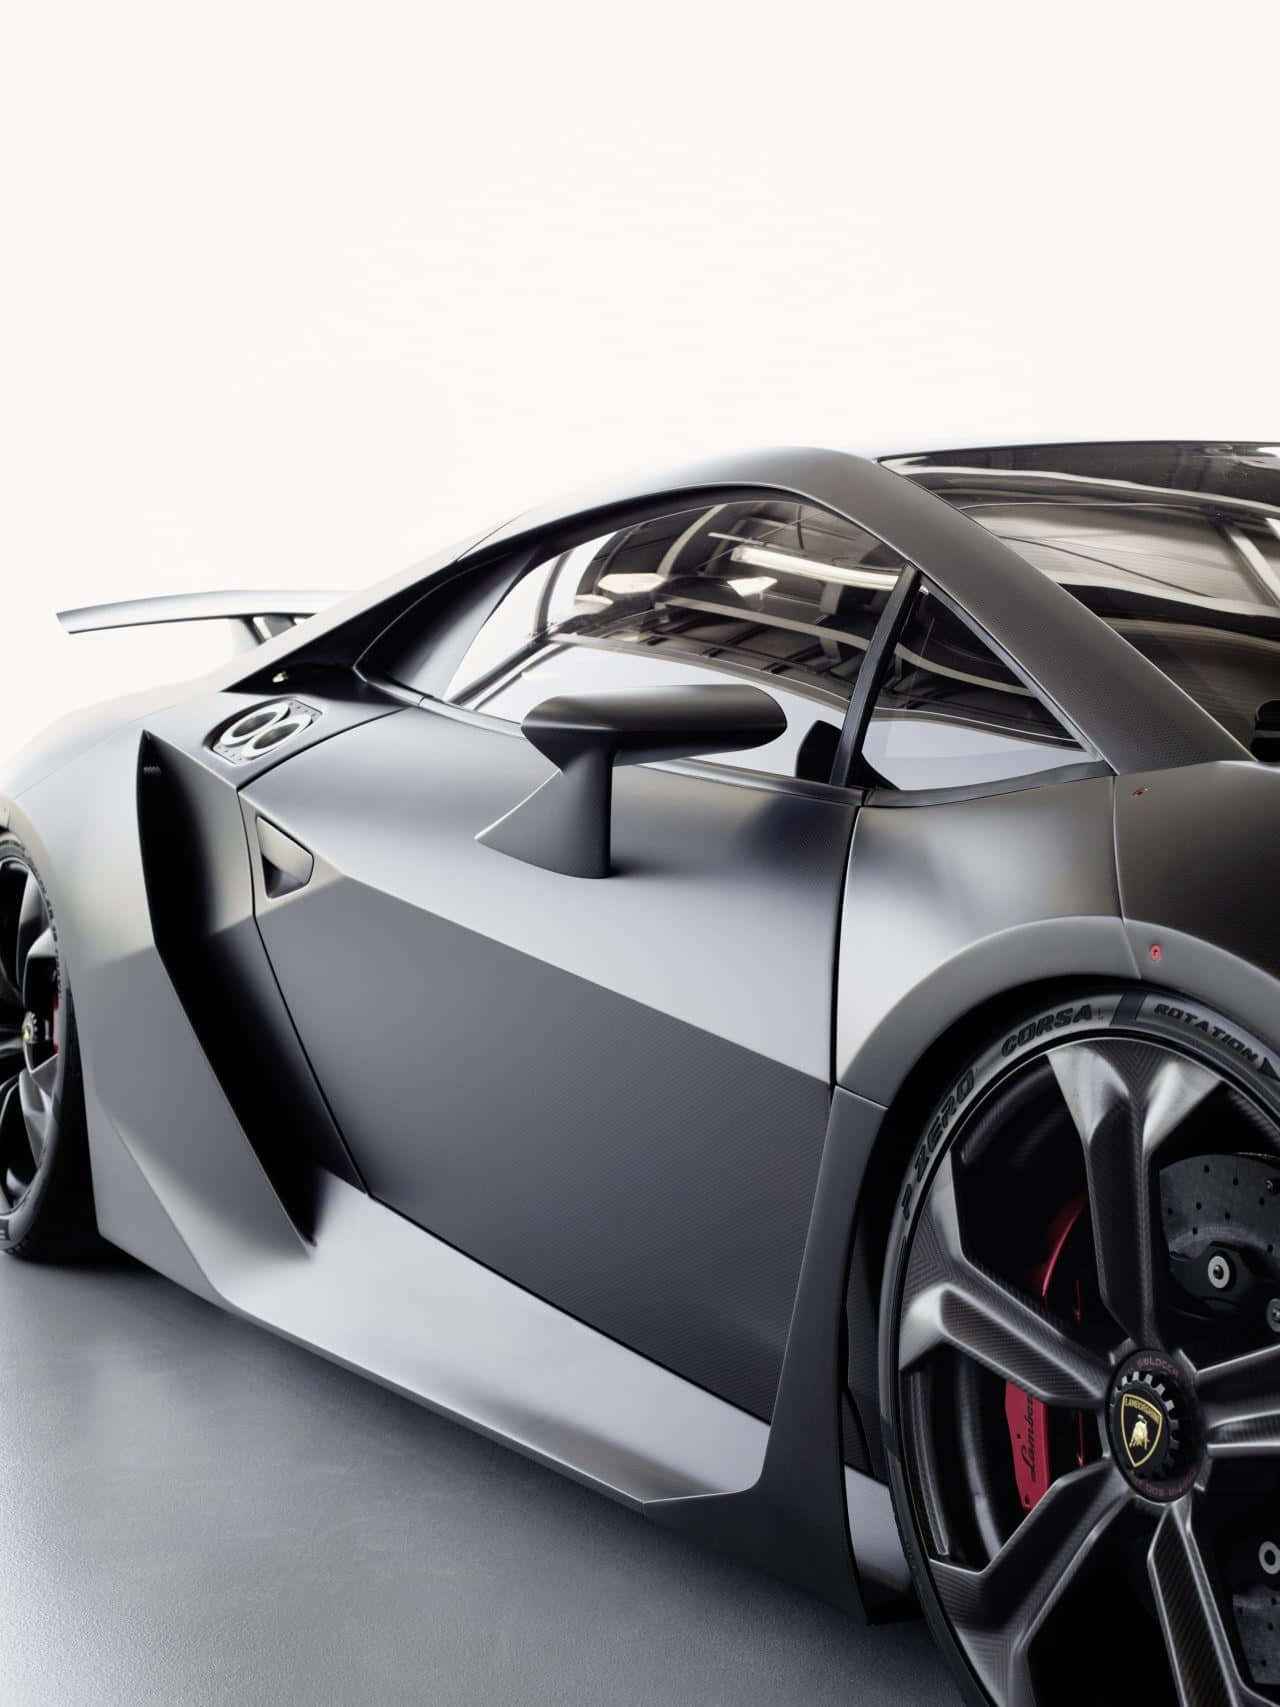 Captivating Lamborghini Sesto Elemento in Action Wallpaper